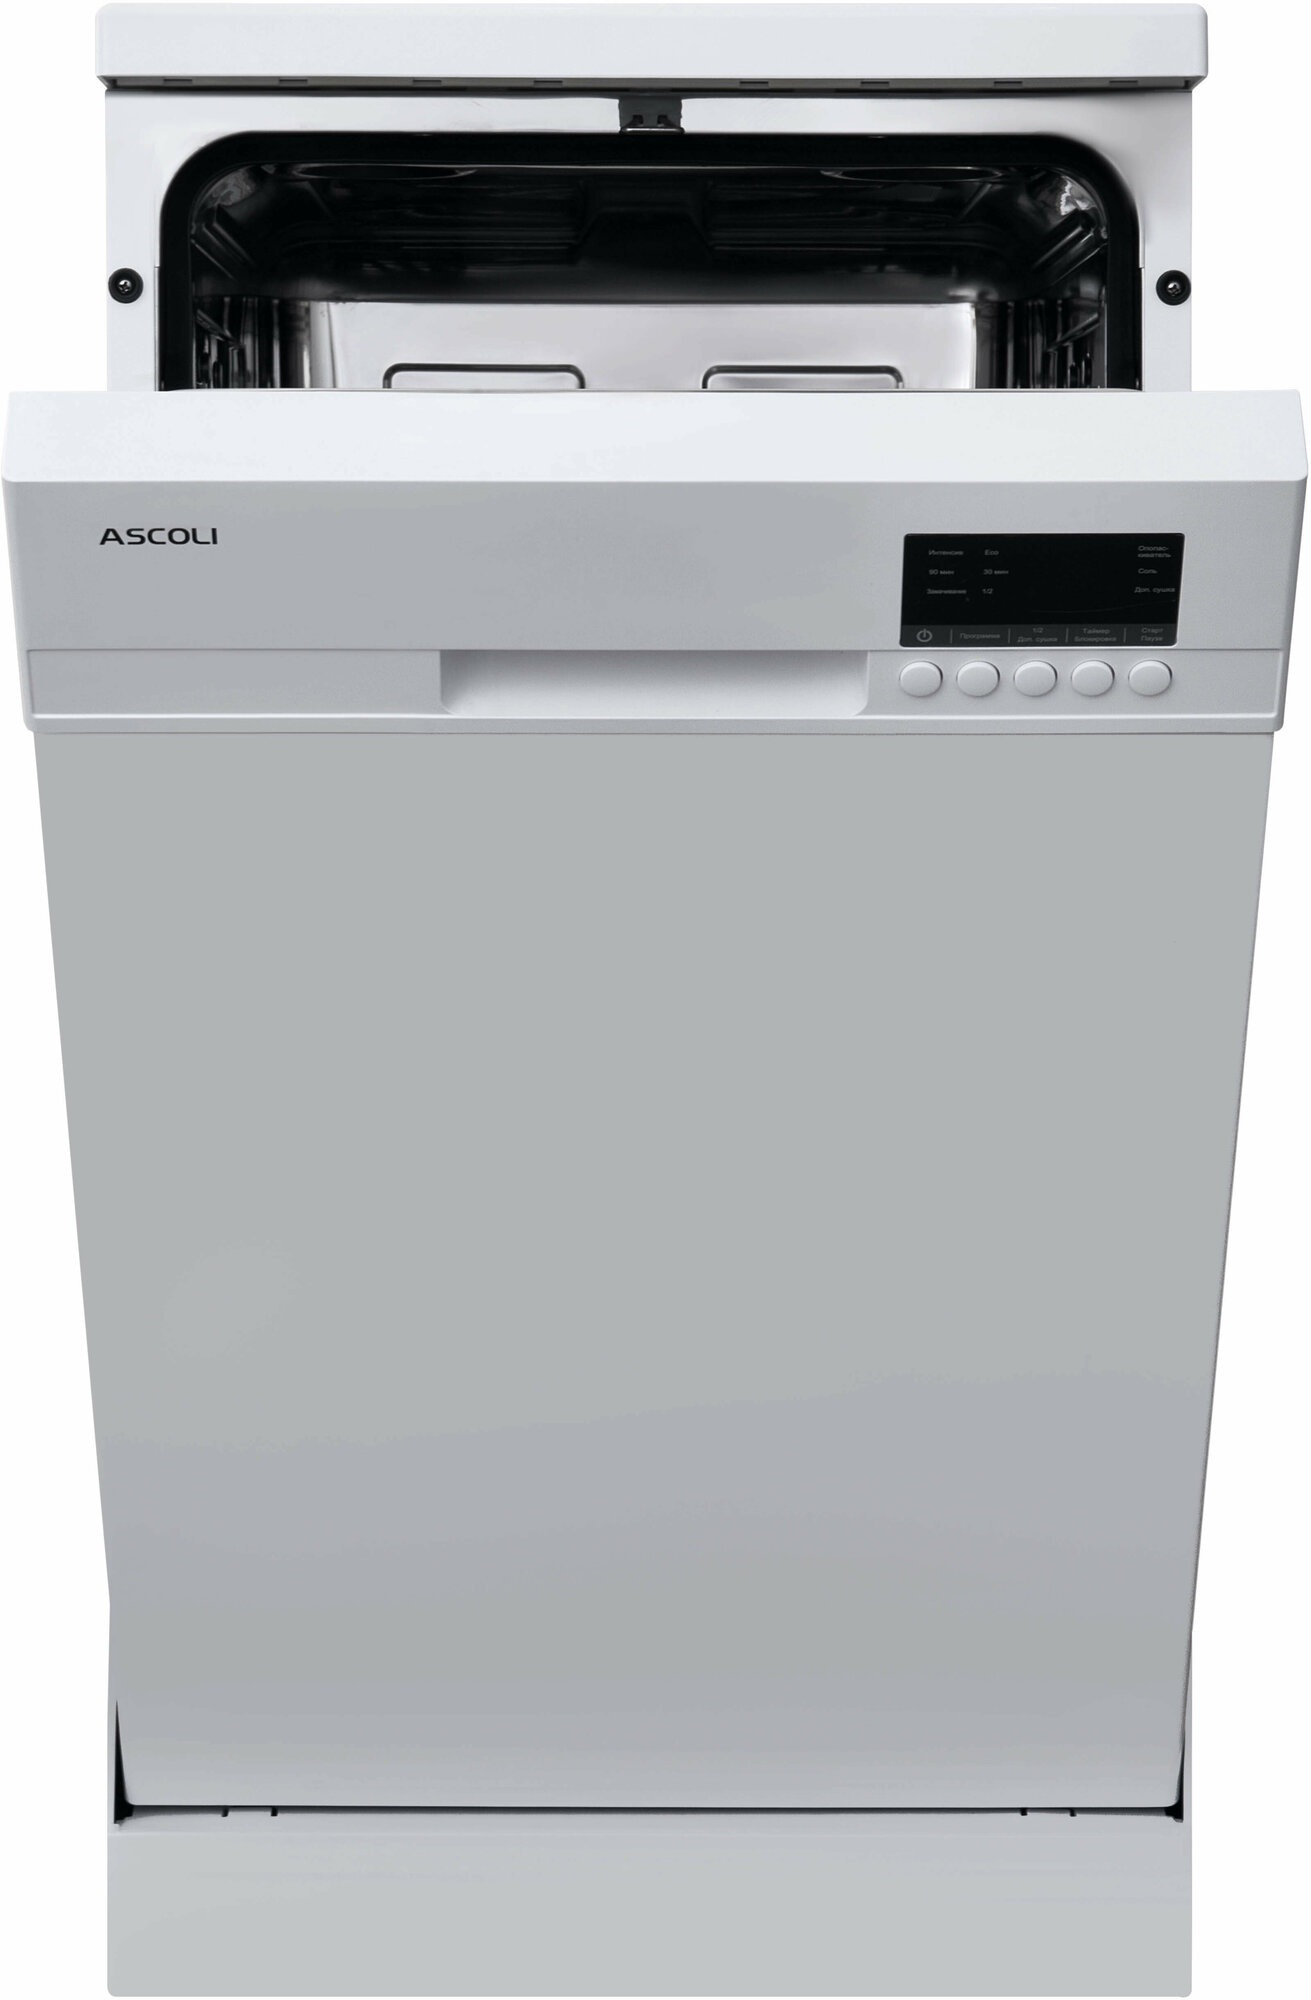 Посудомоечная машина ASCOLI - фото №1